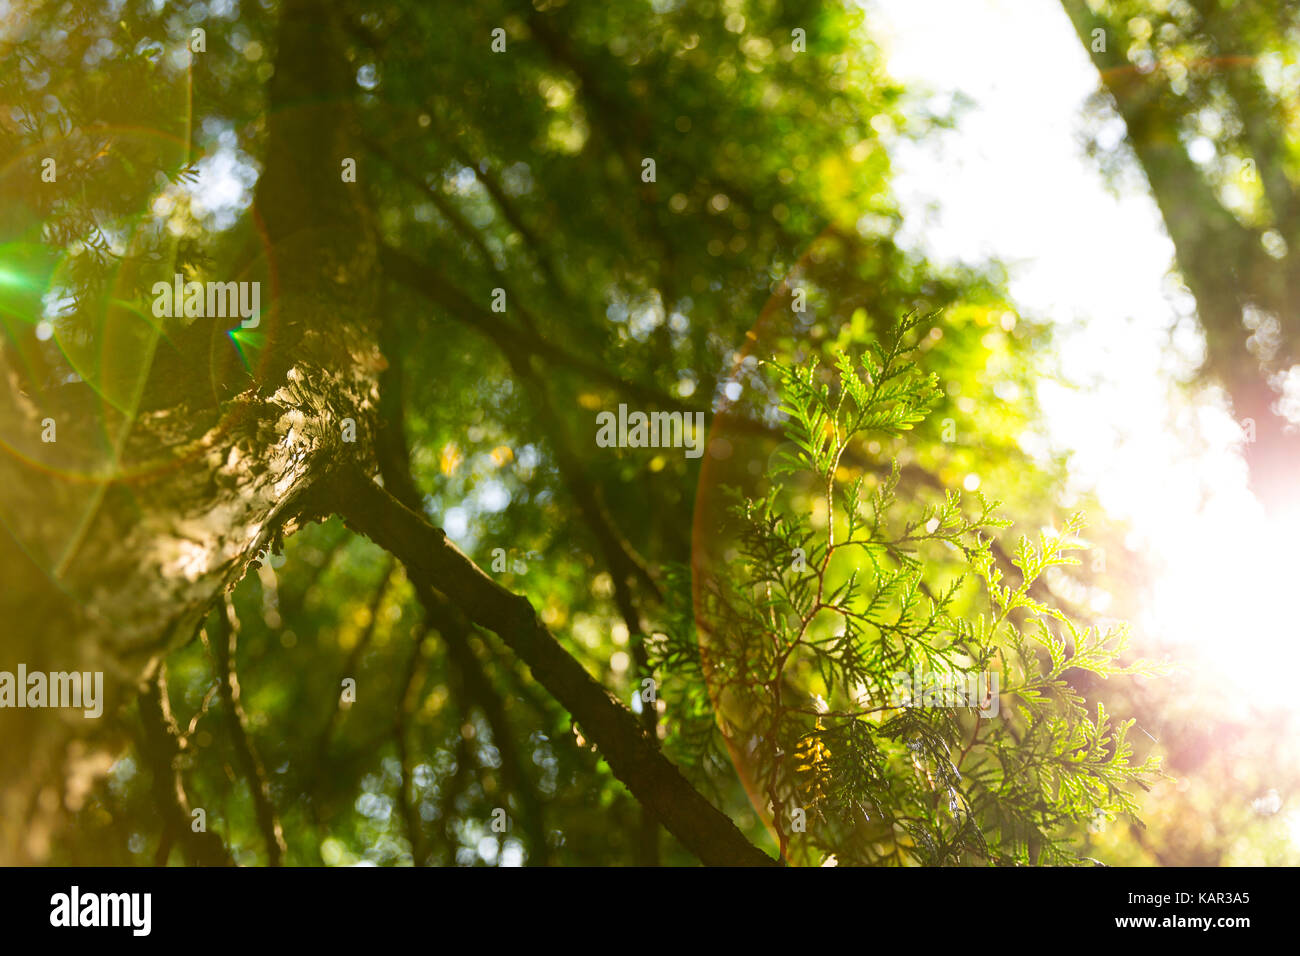 Beautiful green Christmas leaves of thuja tree with bright sunlight beam Stock Photo